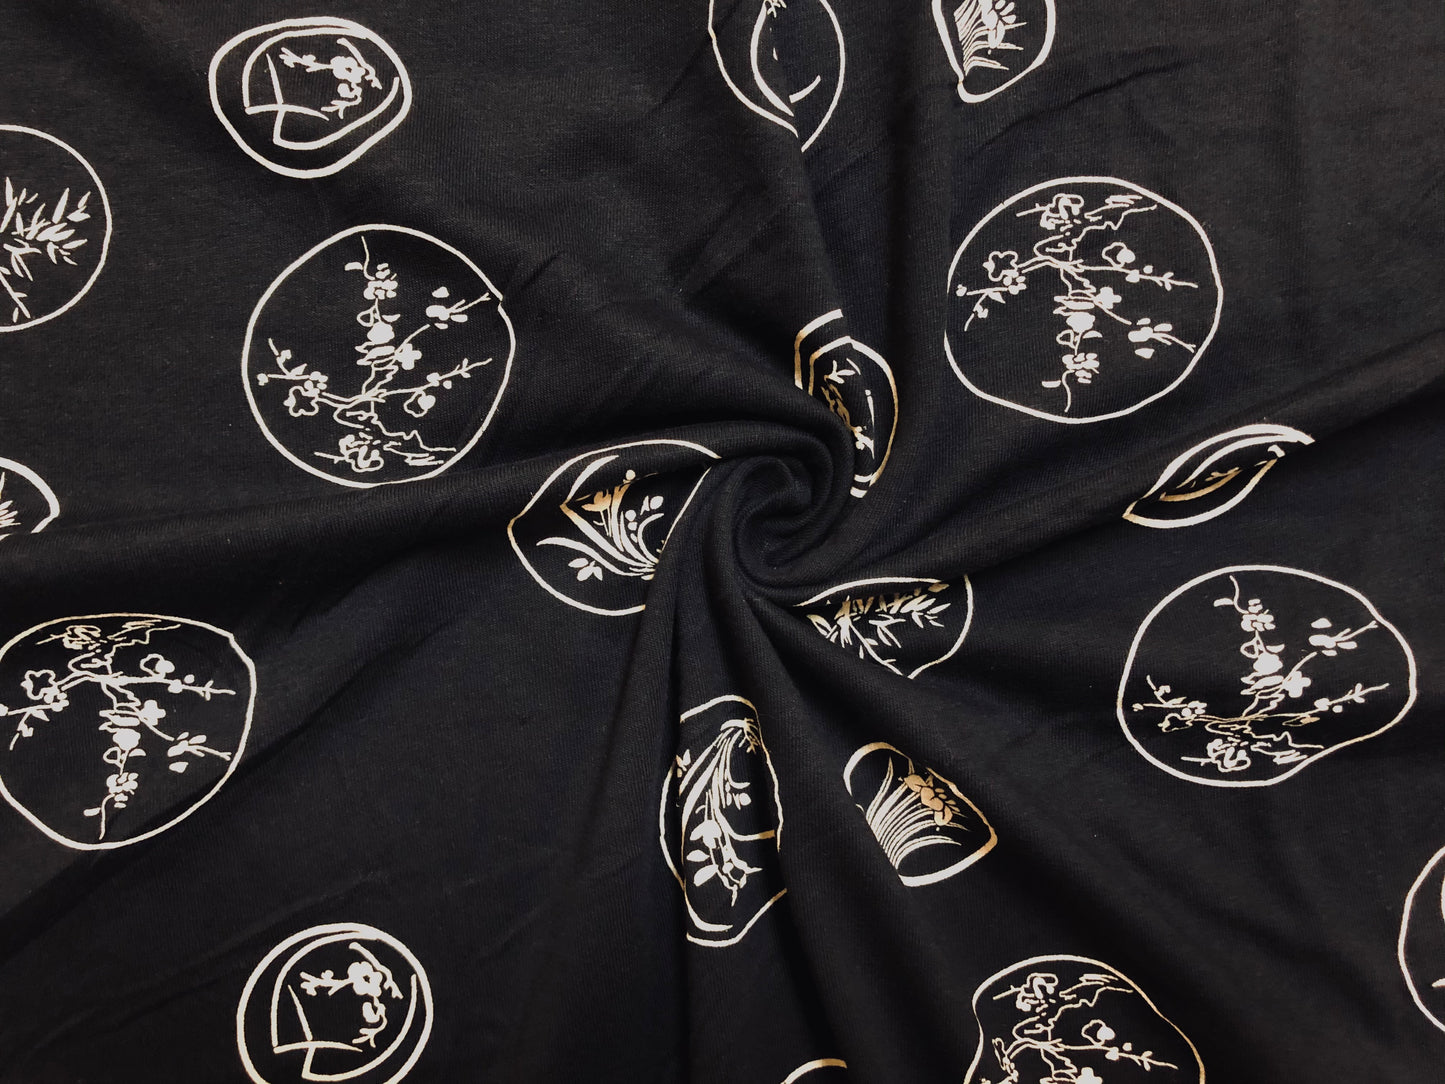 Black and Ivory Japanese Symbols Cotton Print Fabric